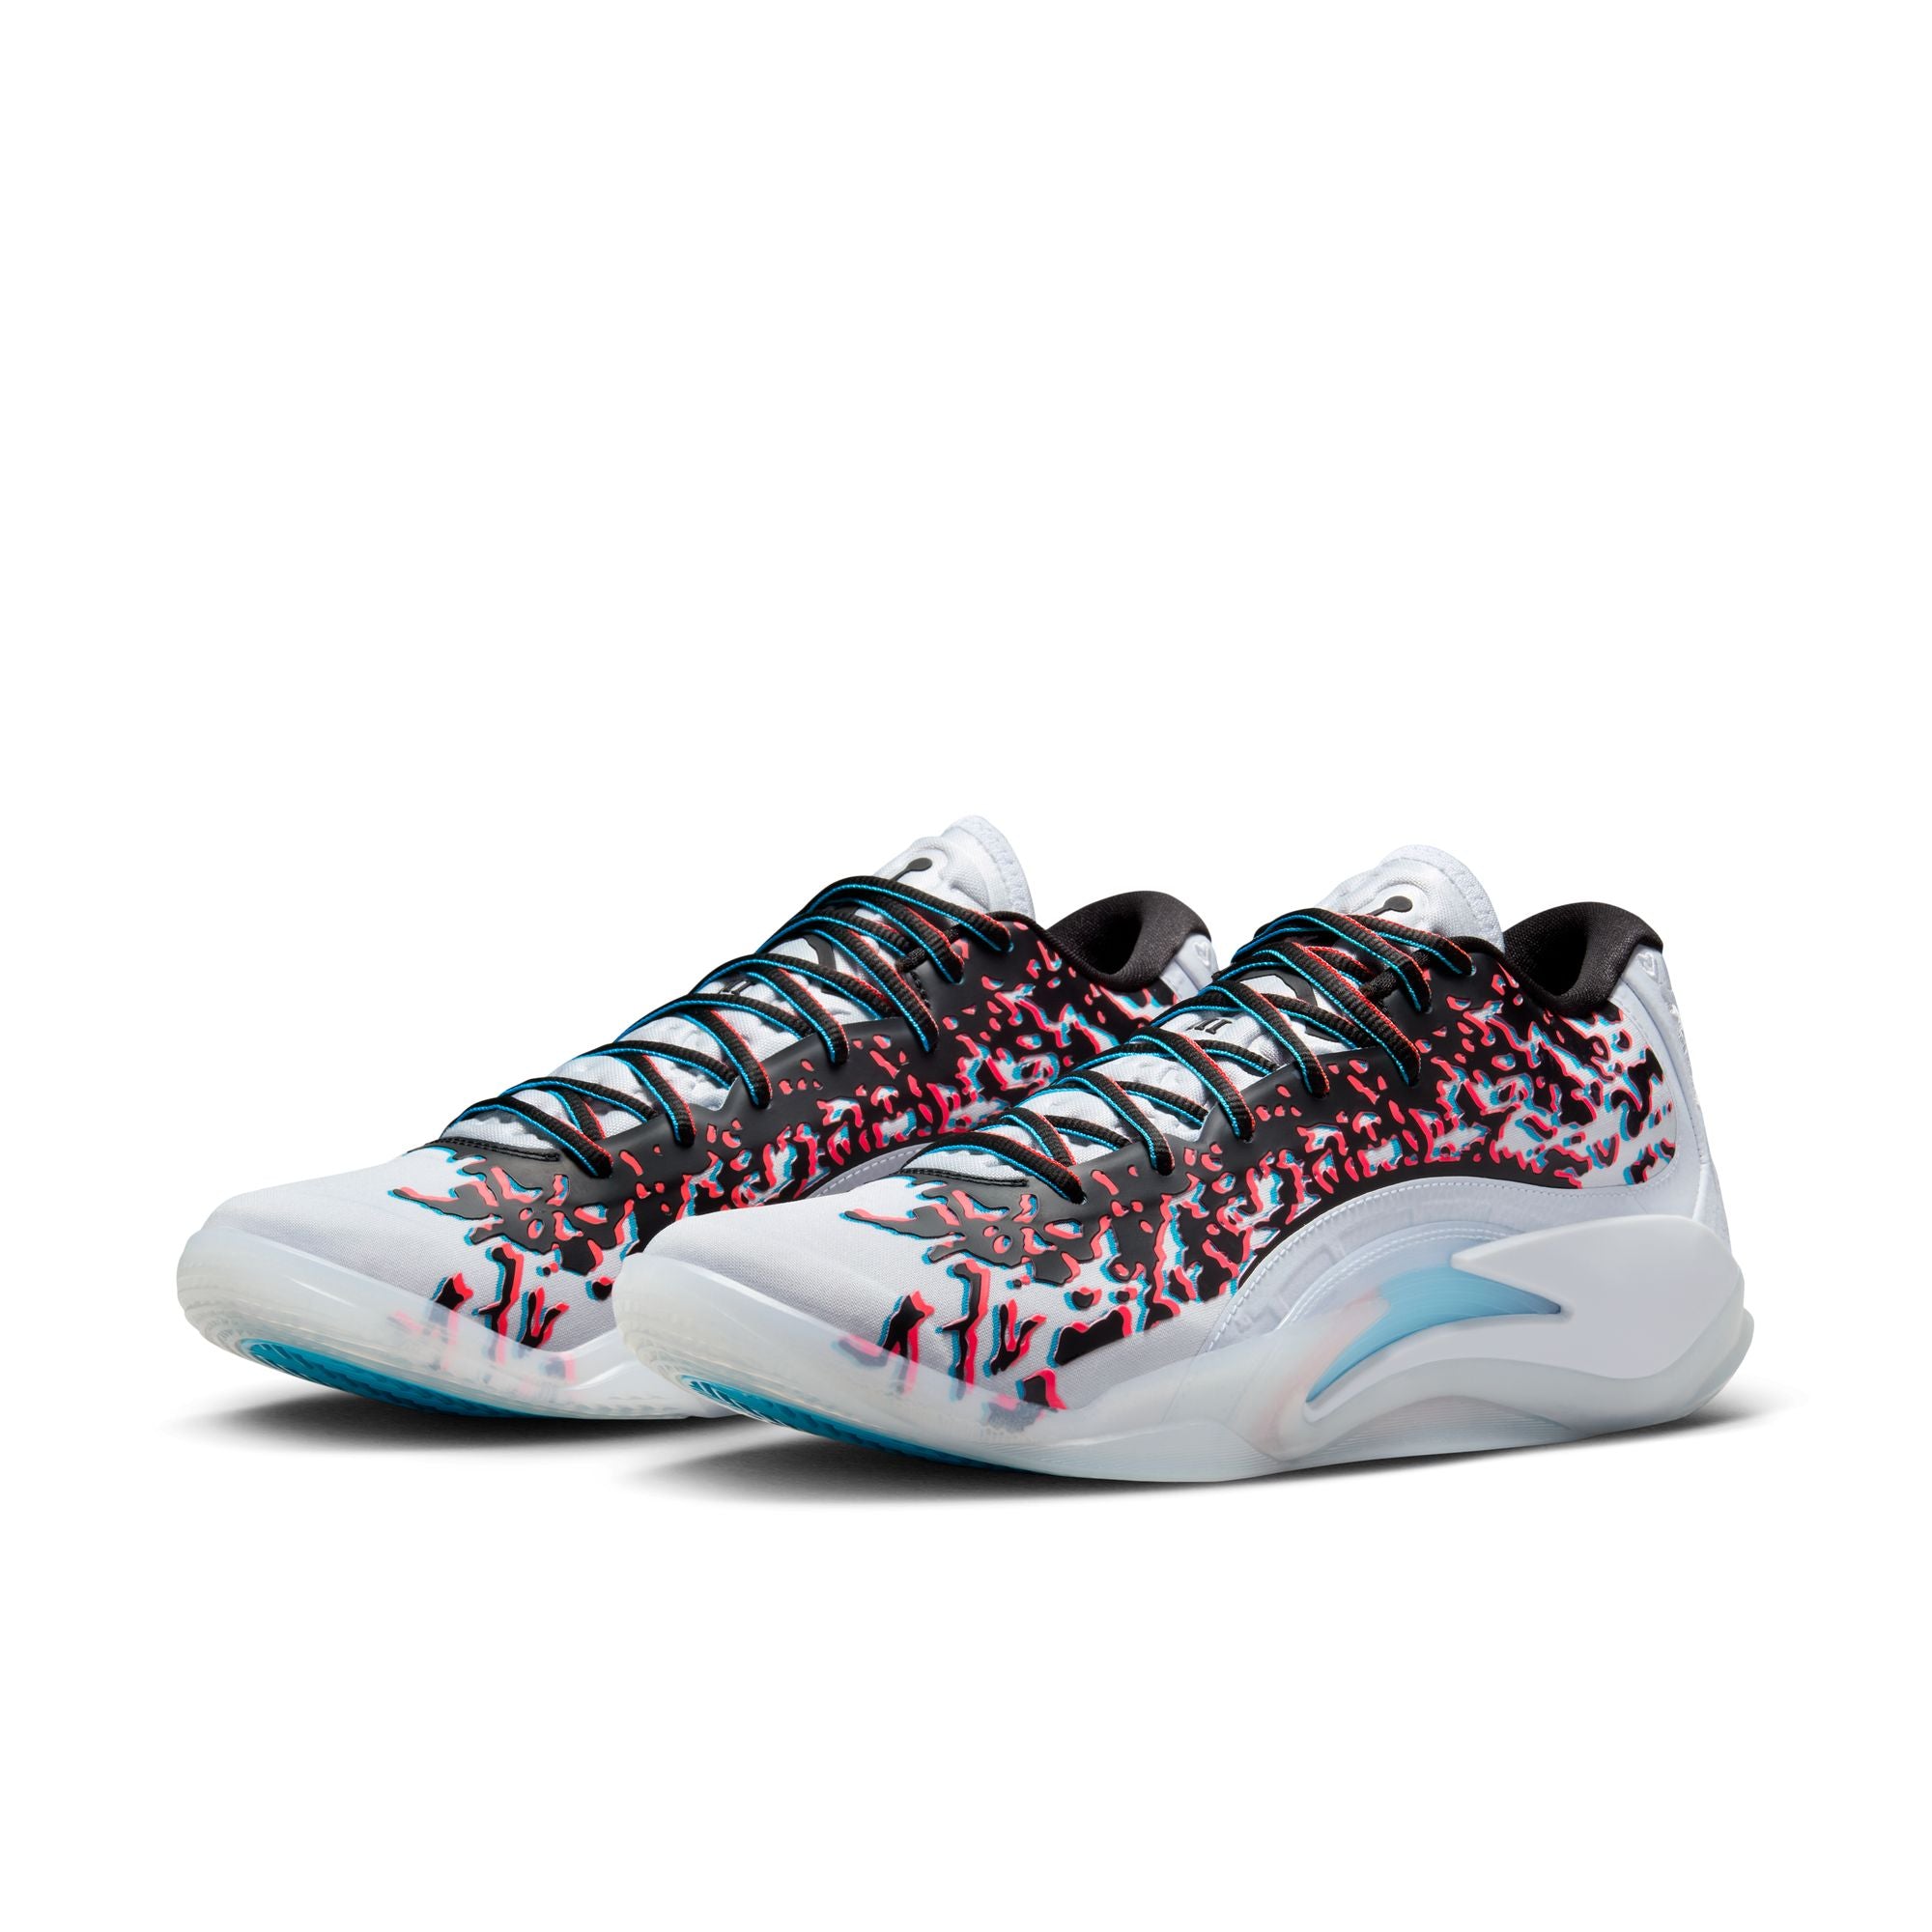 Jordan Zion 3 NRG “3D” Basketball Shoes